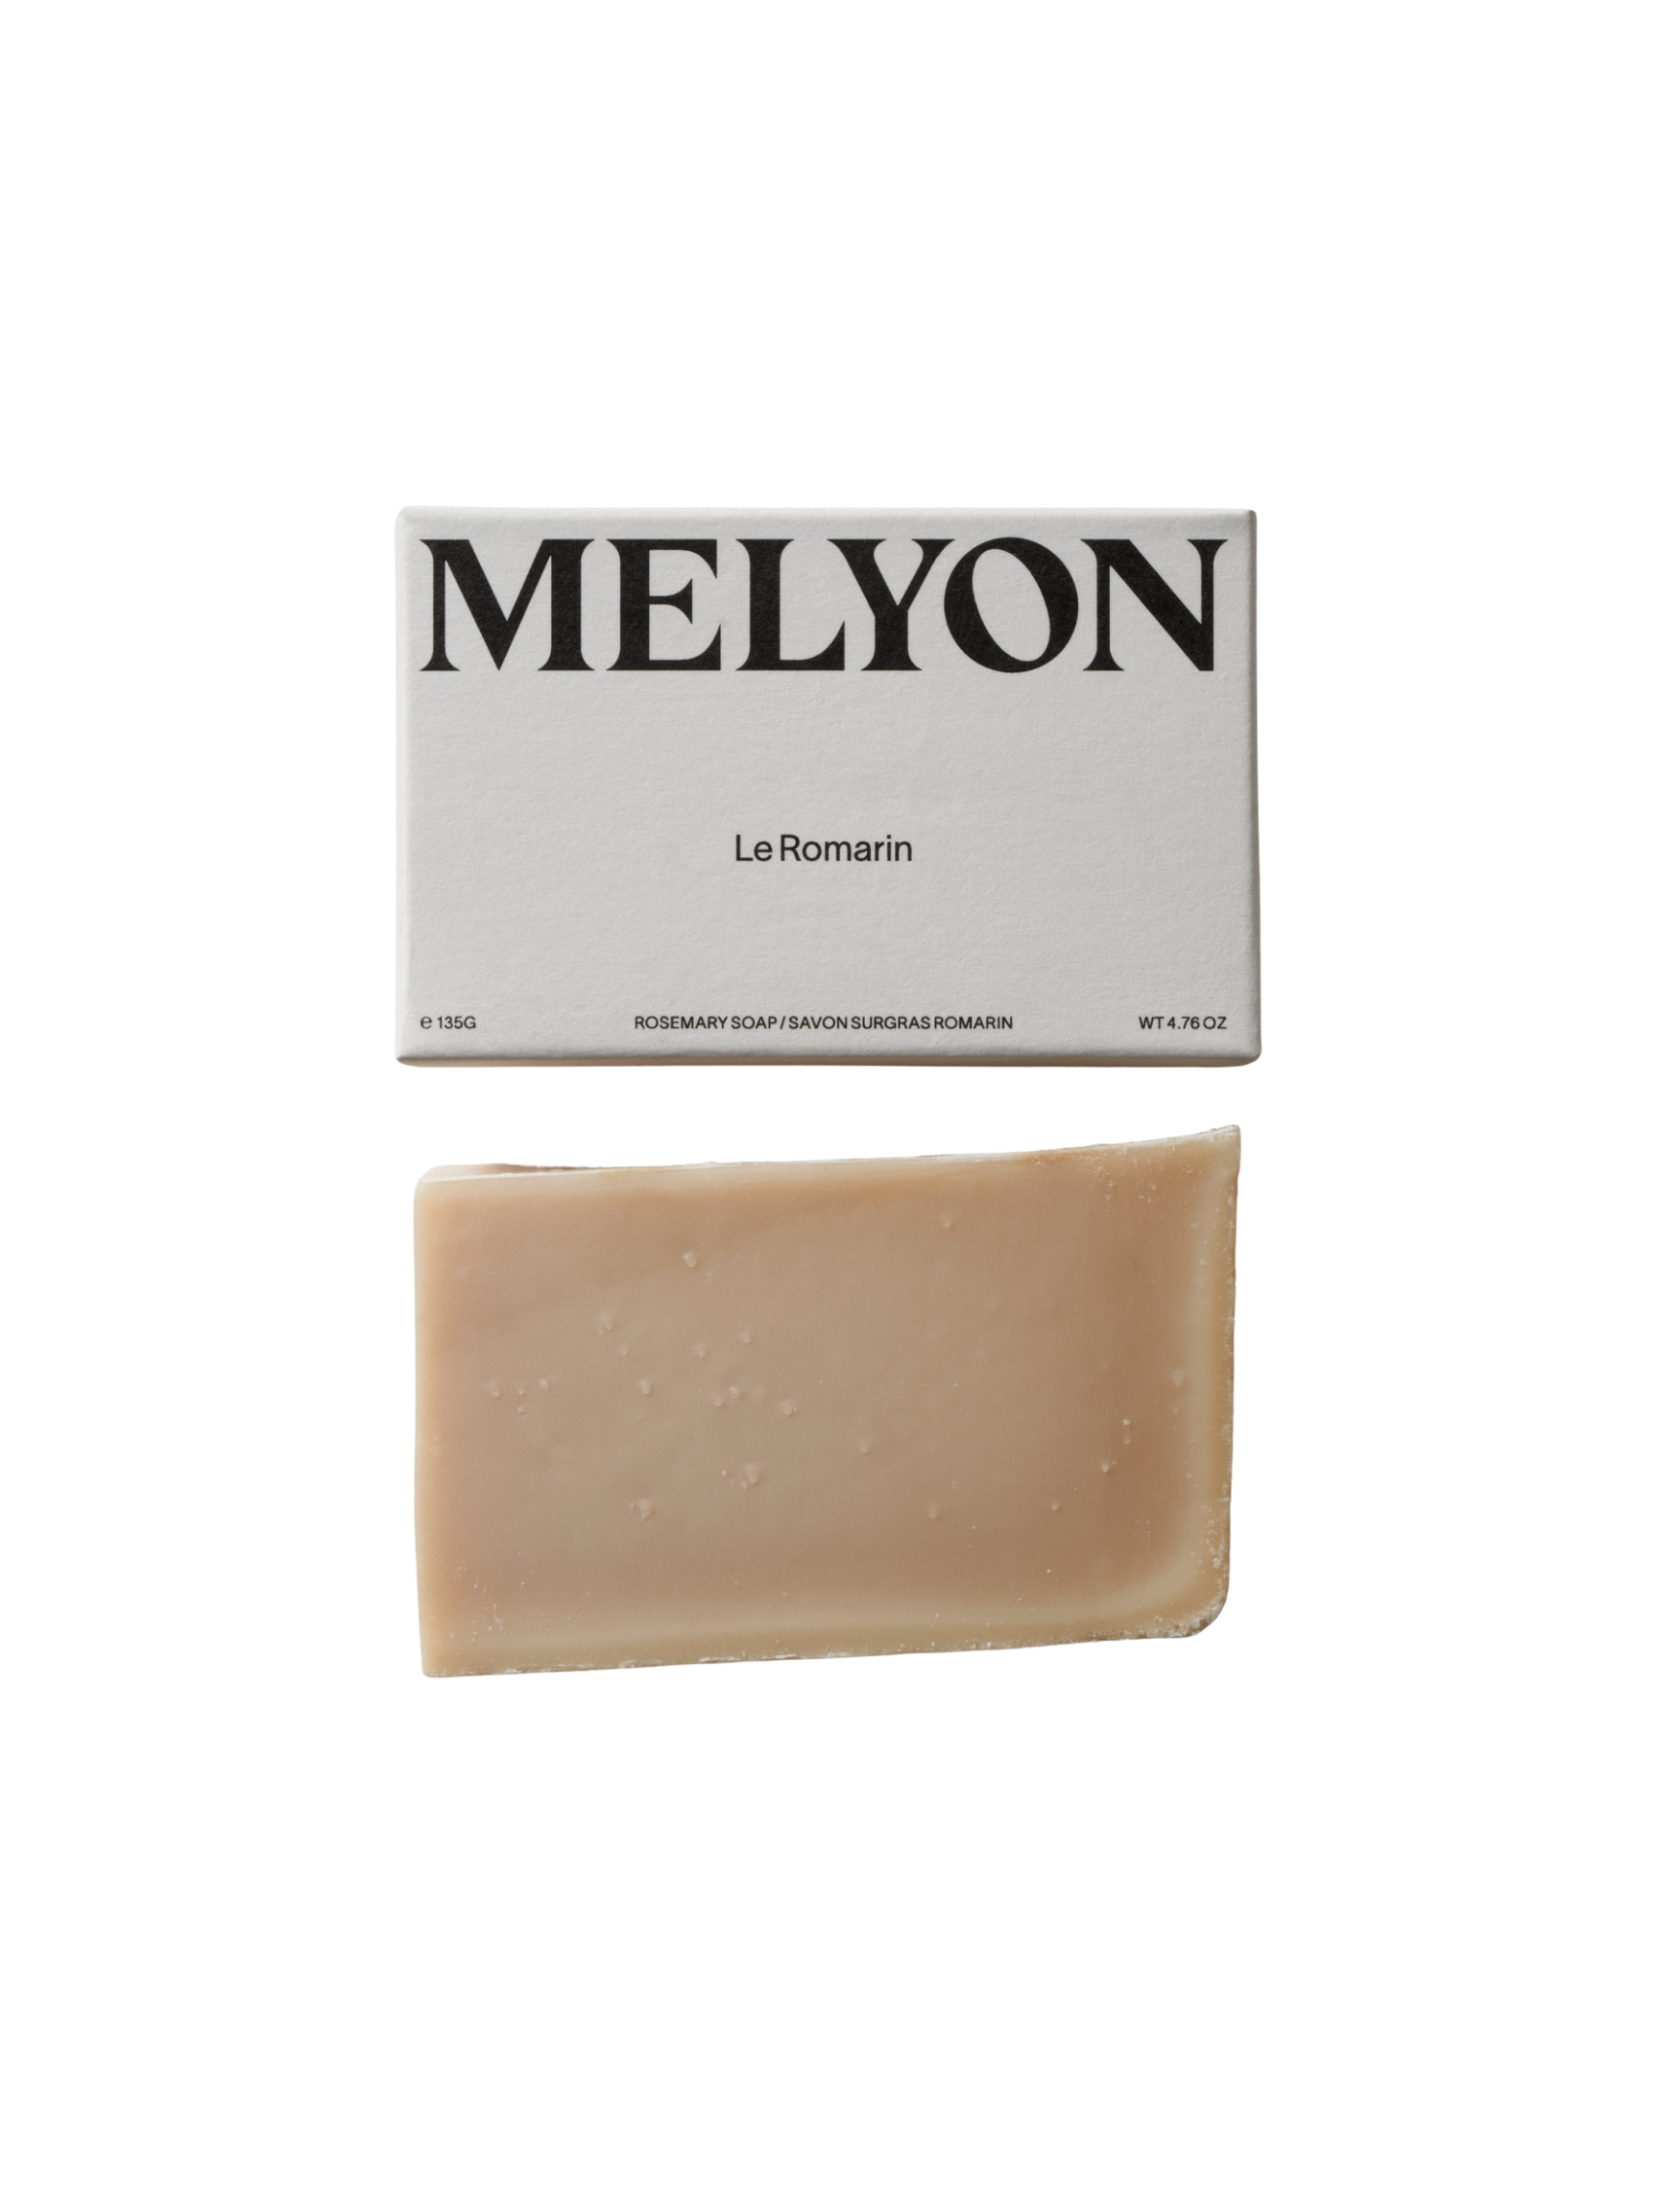 MELYON Le Romarin Soap 135g, Le Romarin Soap, Exfoliating Bar Soap, MELYON, PourHommies